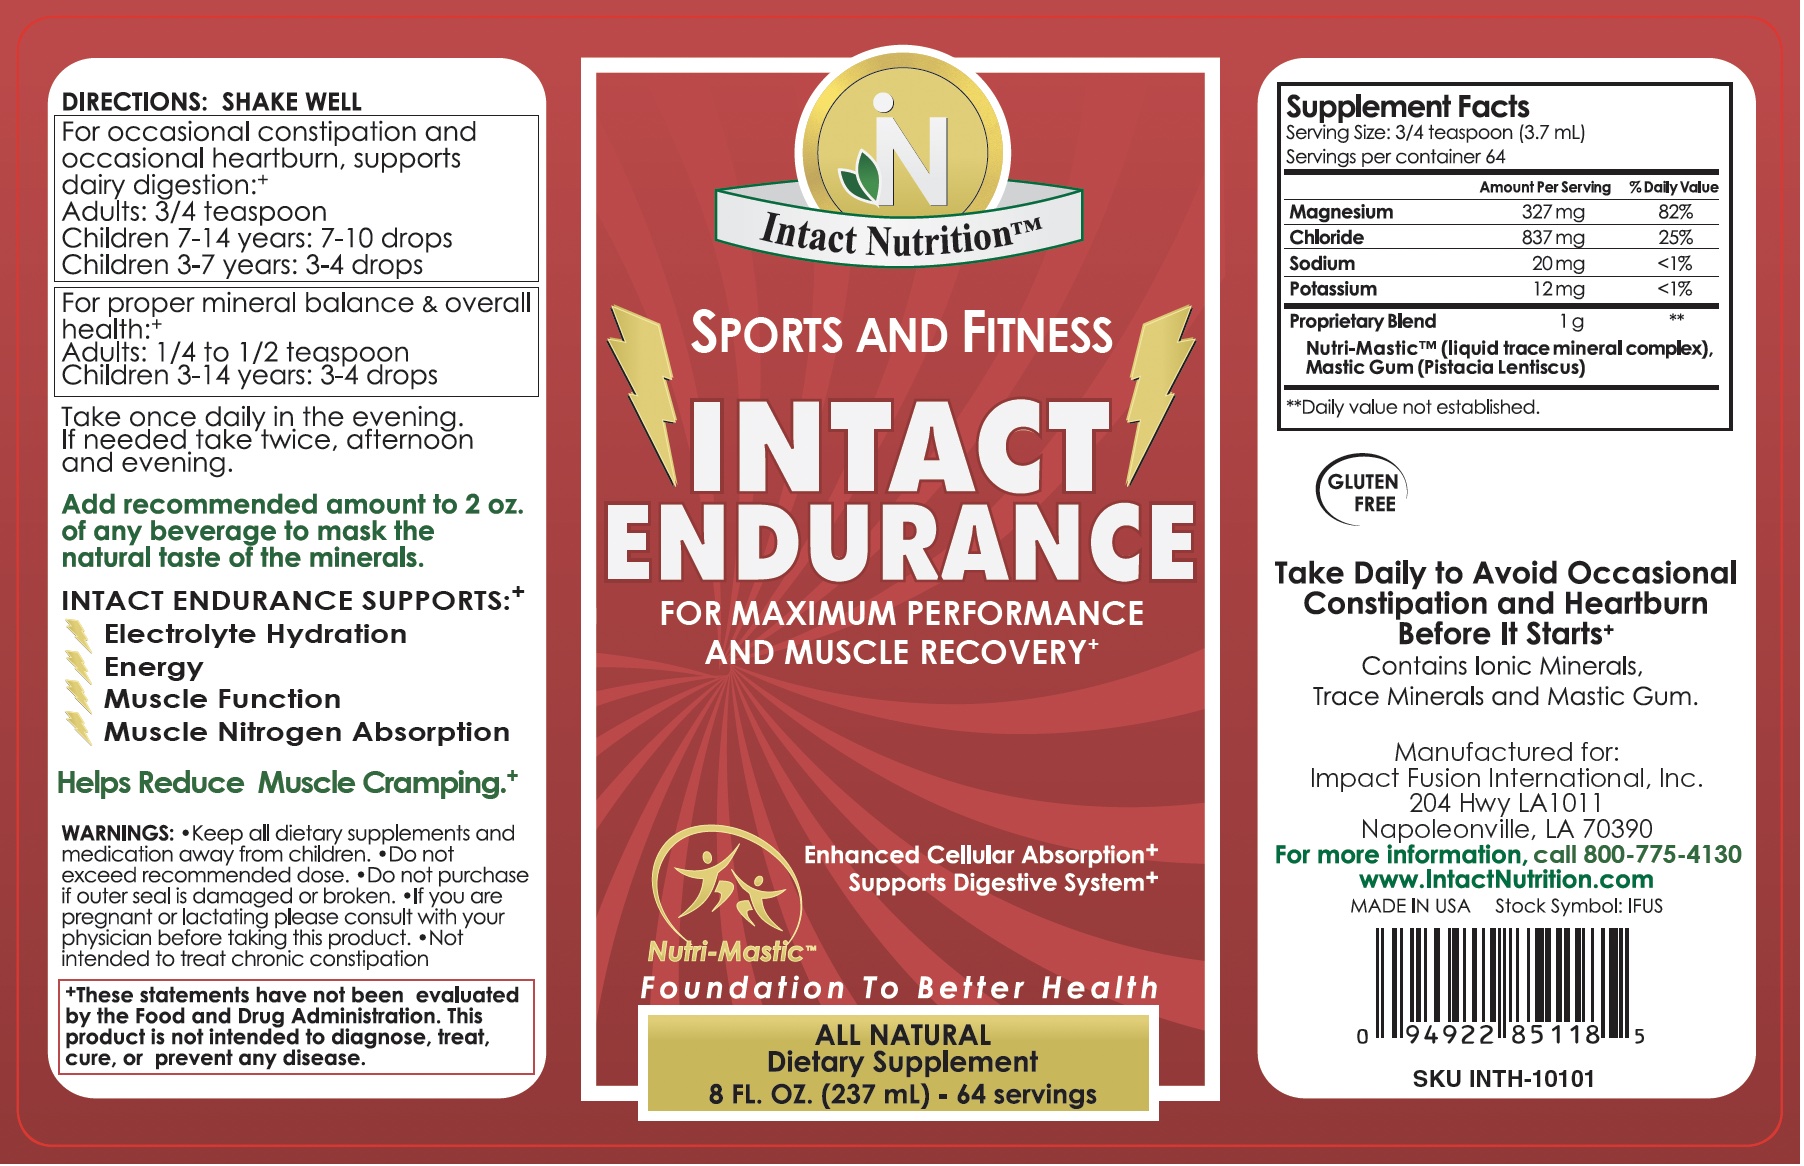 Intact Endurance Label